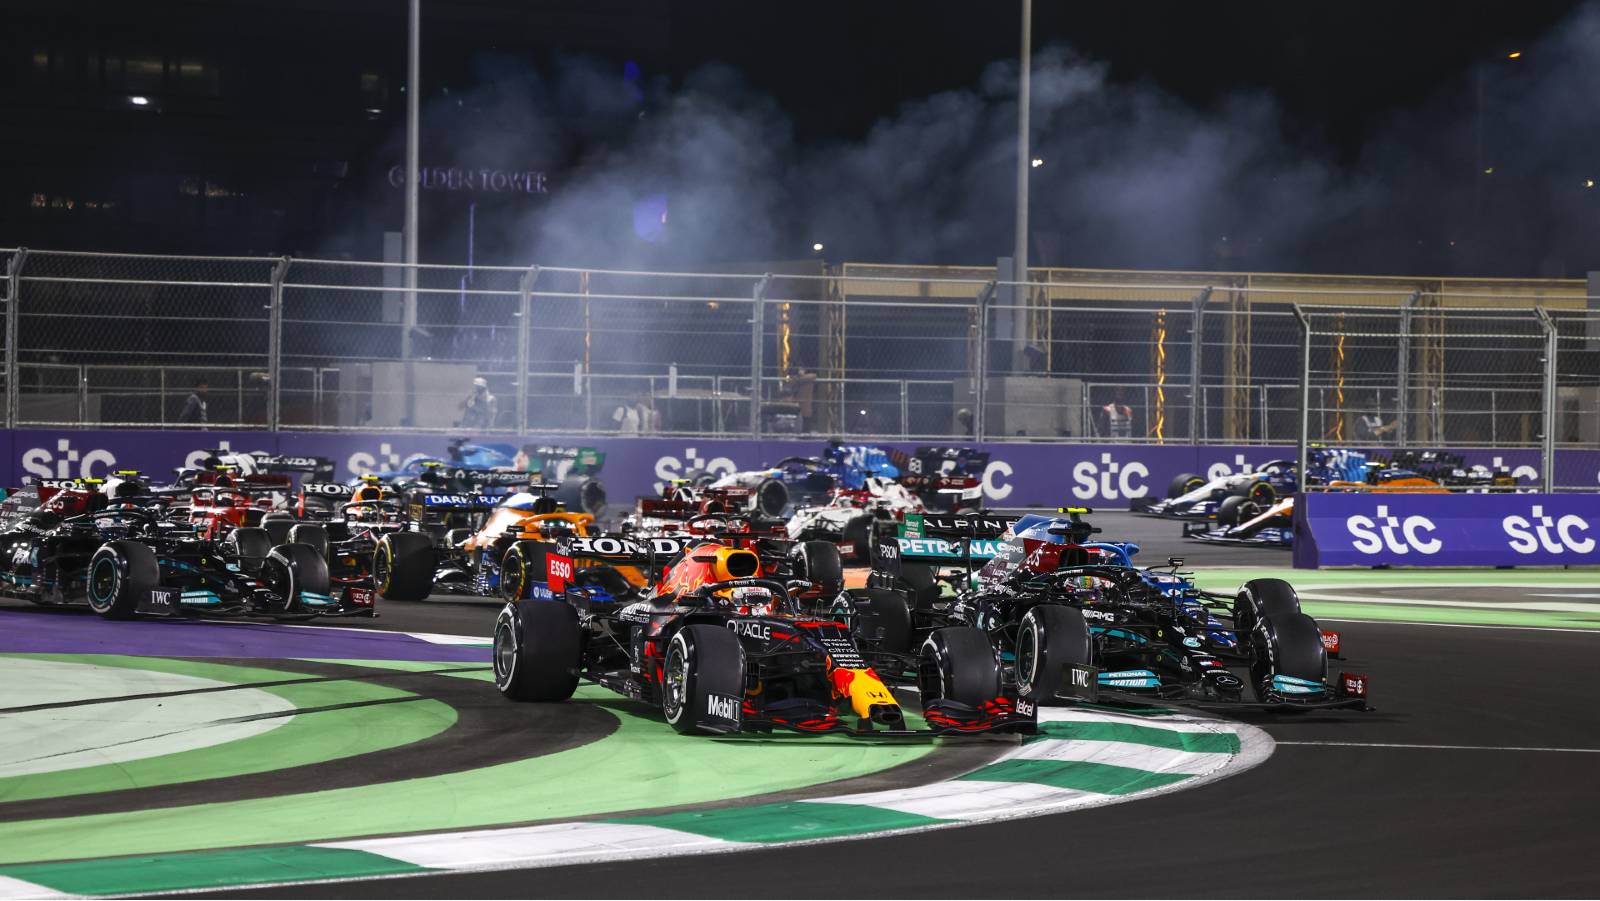 Max Verstappen's Red Bull cuts across the kerb. Jeddah December 2021.